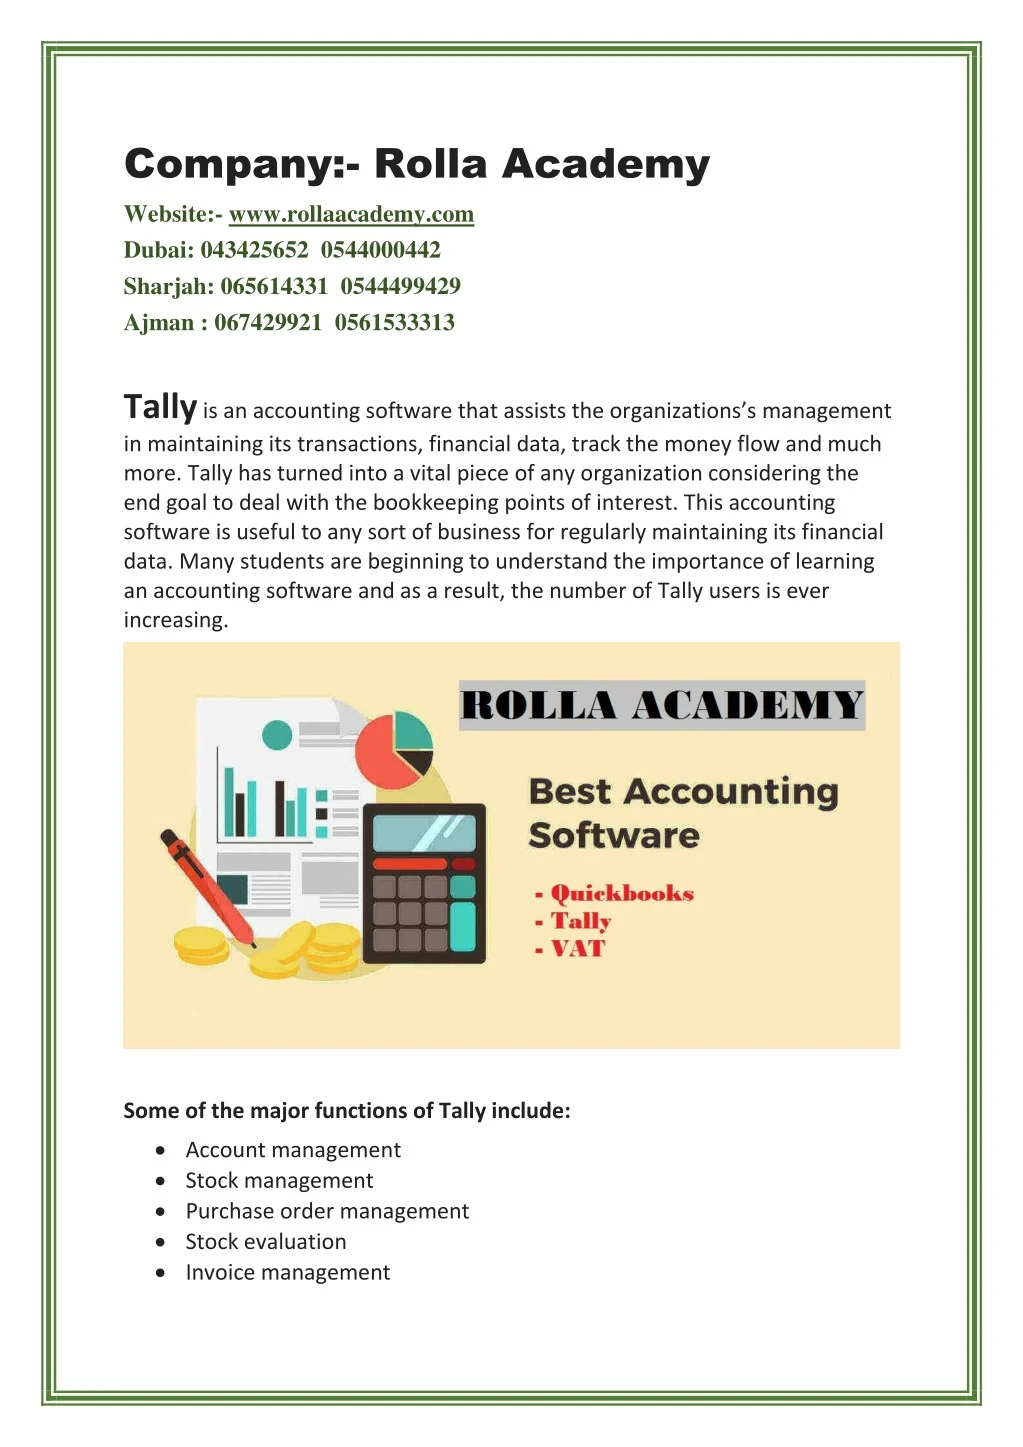 company rolla academy website www rollaacademy